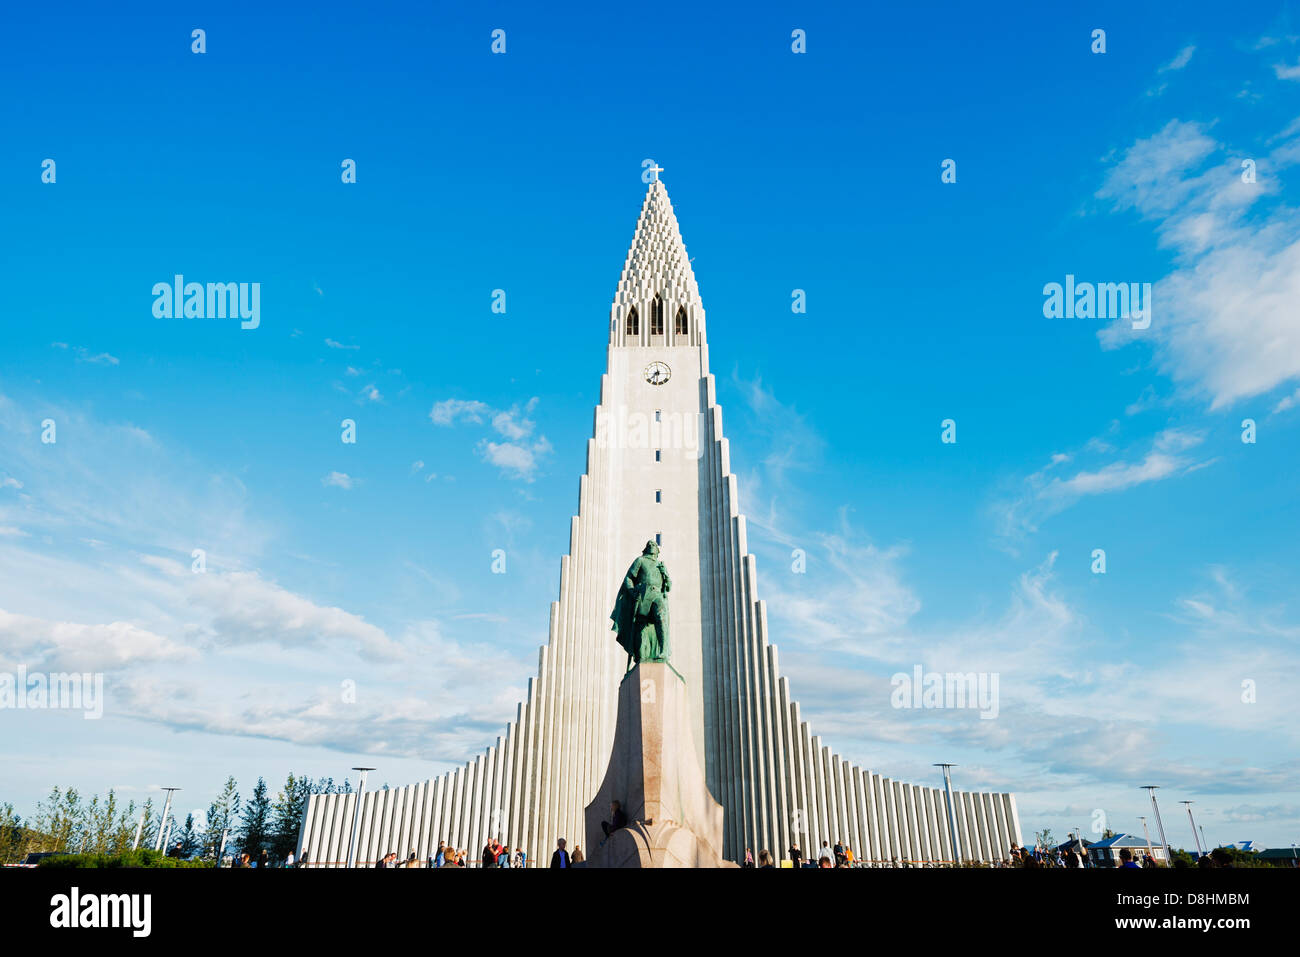 Iceland, Reykjavik, Hallgrimskikja church, Statue of Liefur Eiriksson Stock Photo